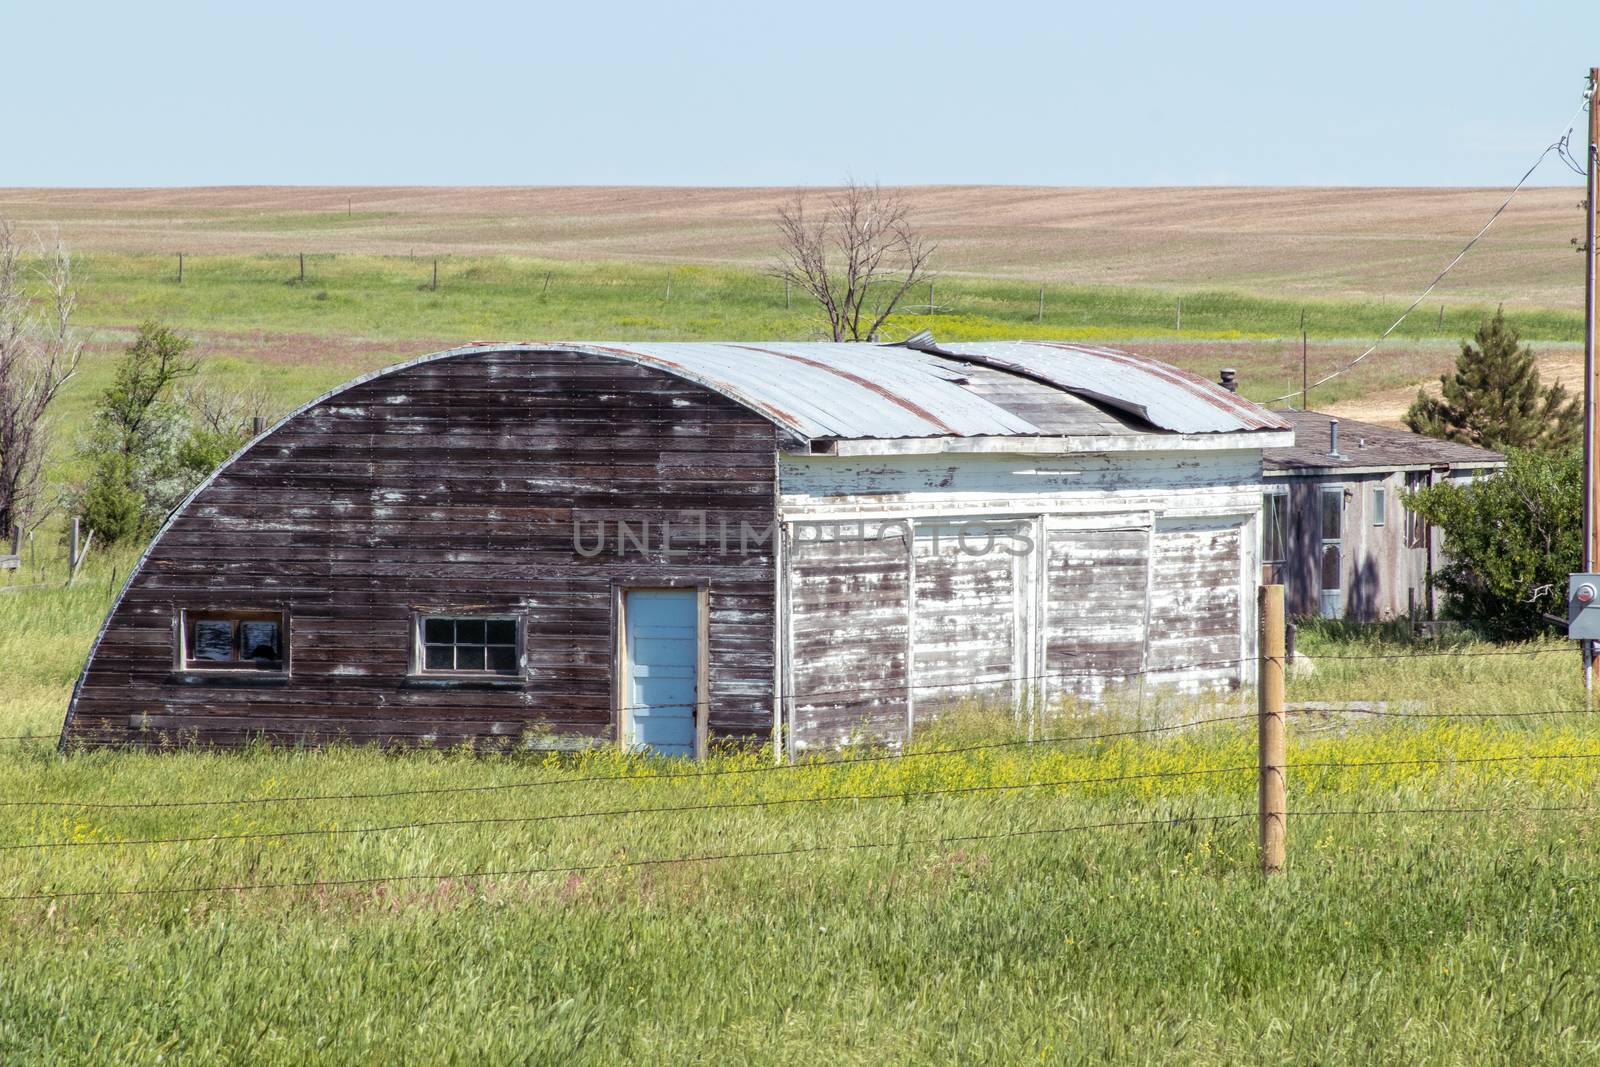 An old barn in a grassy field by gena_wells